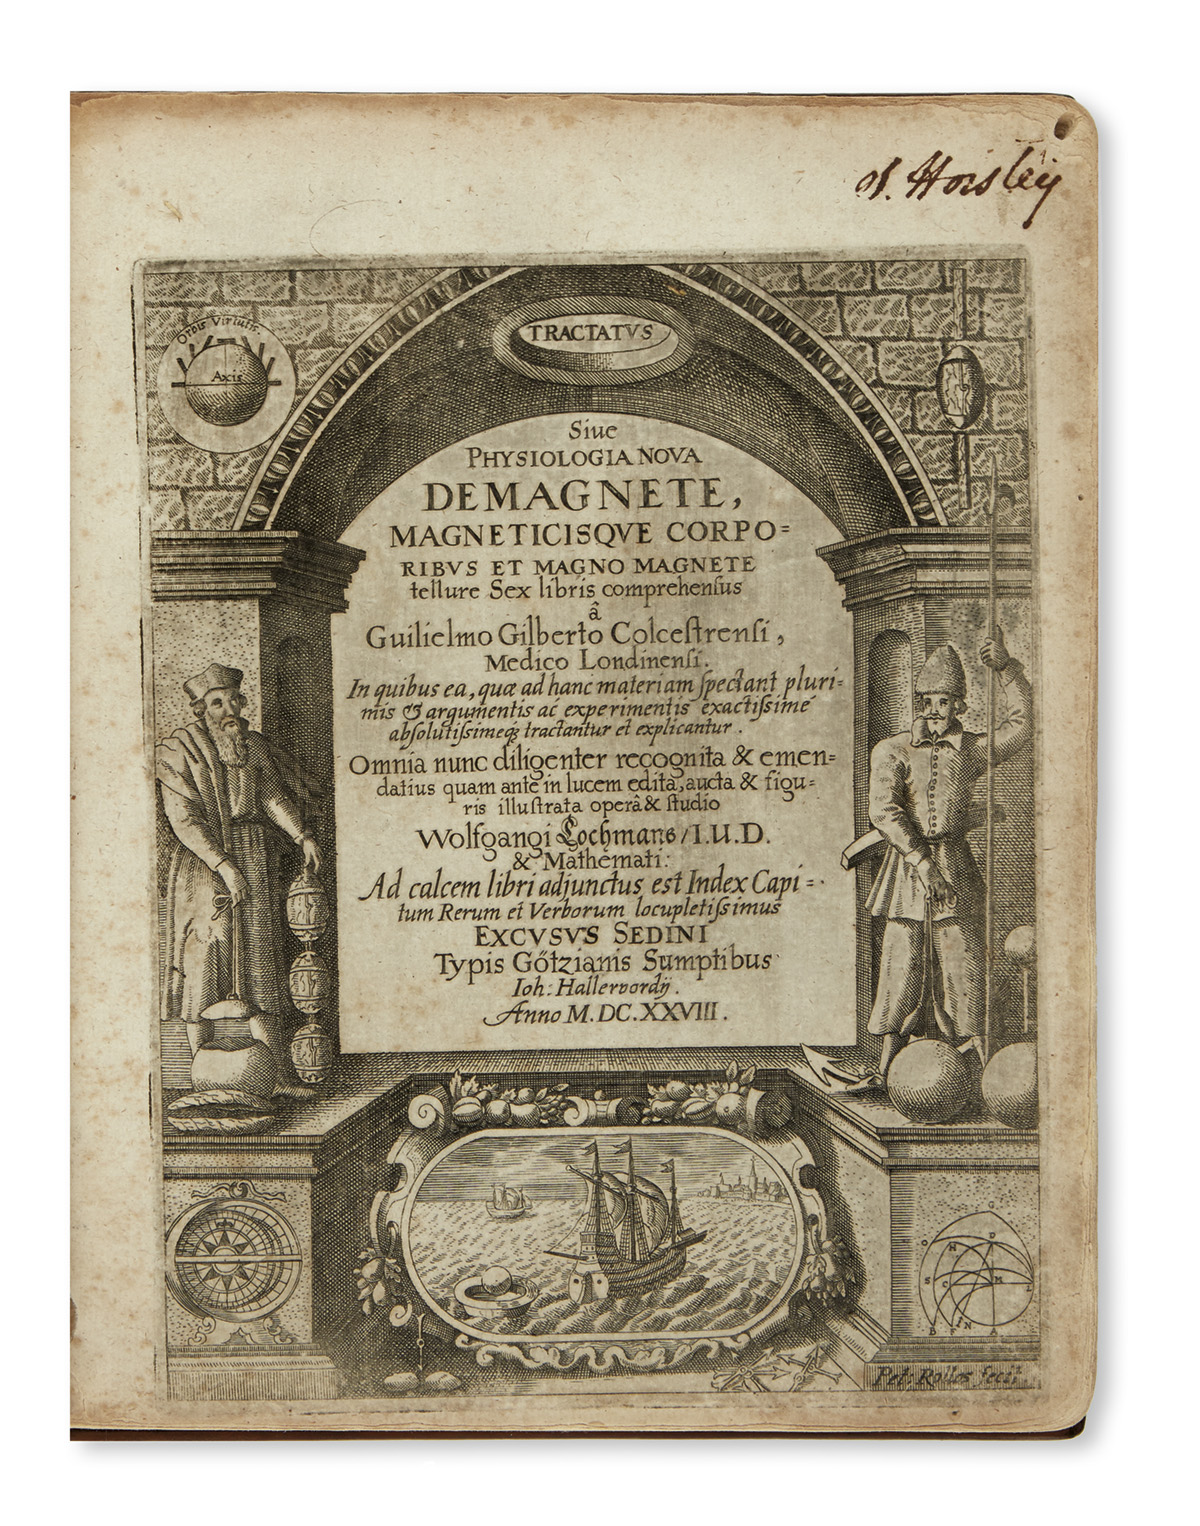 GILBERT, WILLIAM. Tractatus sive physiologia nova de magnete.  1628